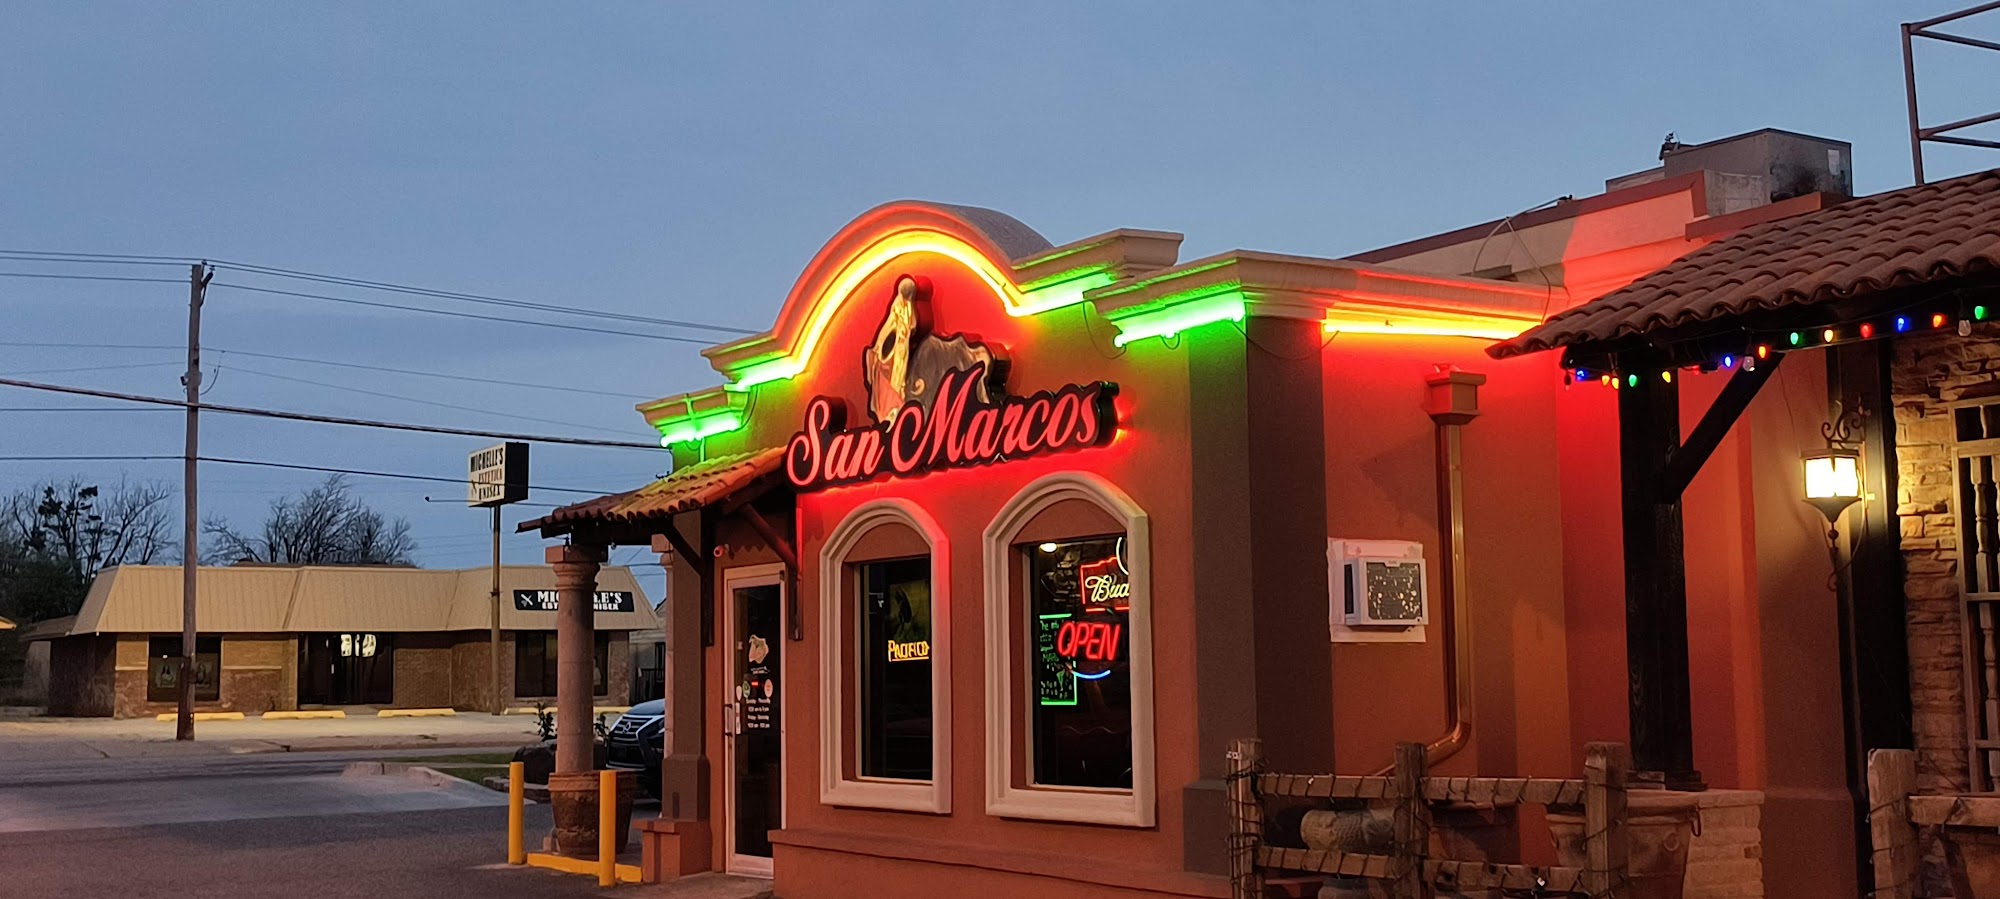 San Marcos Mexican restaurant